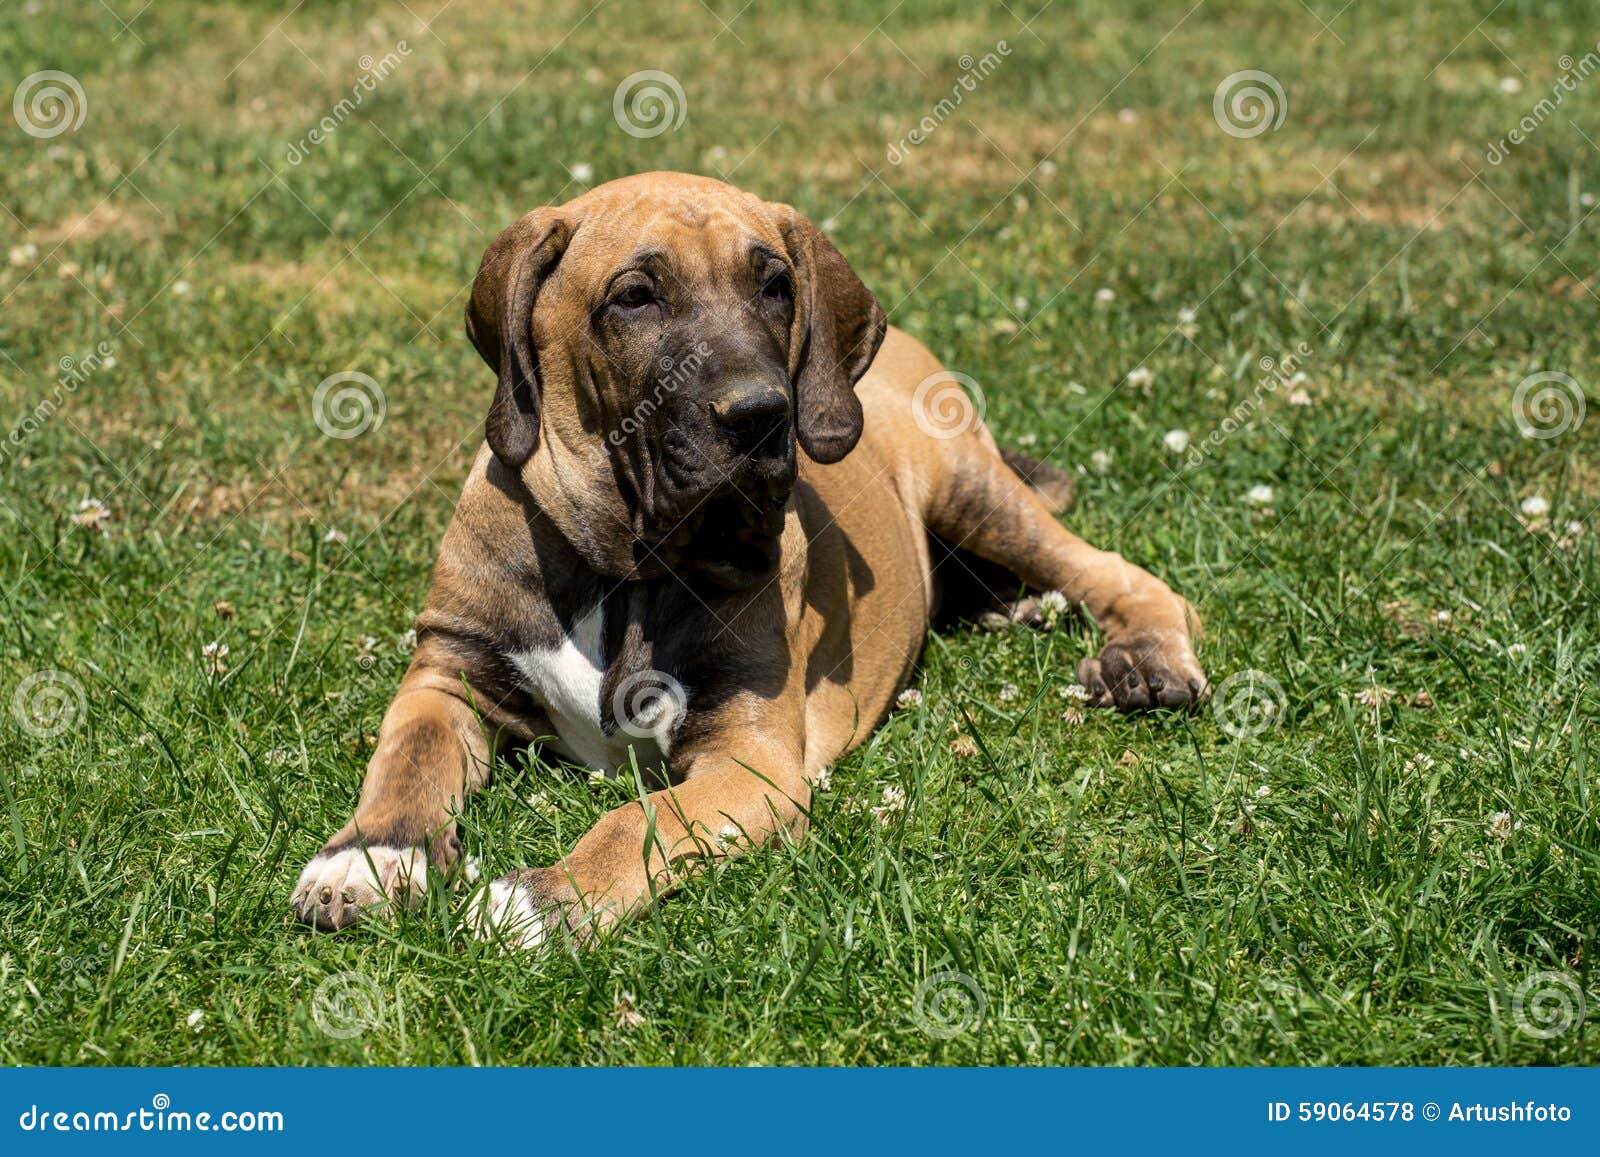 https://thumbs.dreamstime.com/z/puppy-fila-brasileiro-brazilian-mastiff-outdoor-green-grass-59064578.jpg